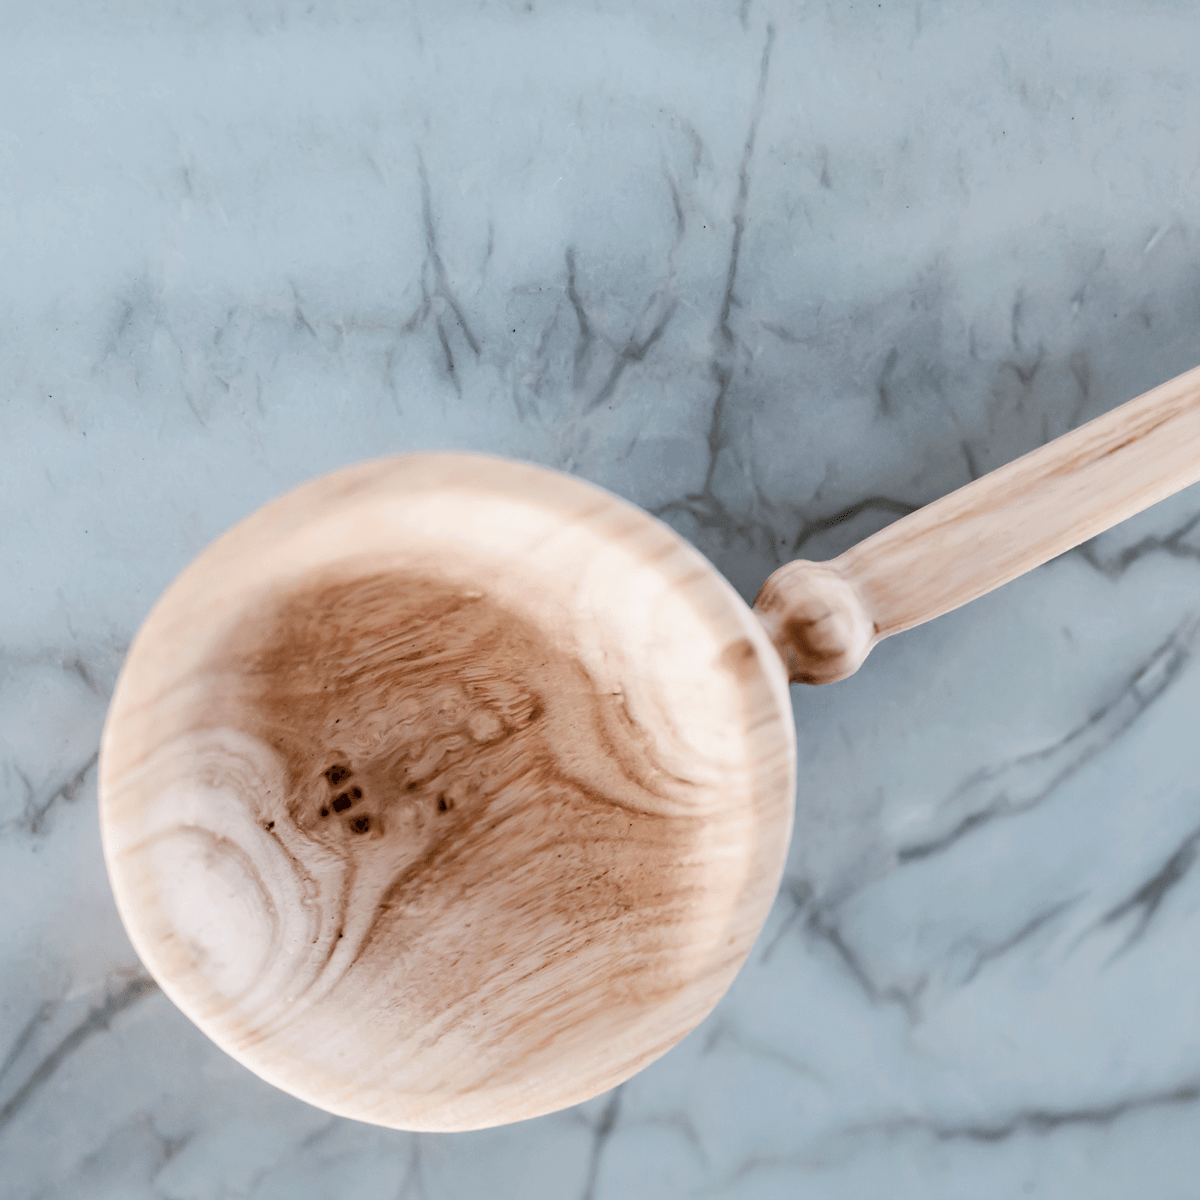 Hand Carved Wooden Spoon | Rwanda Artisan-made Wooden Spoon